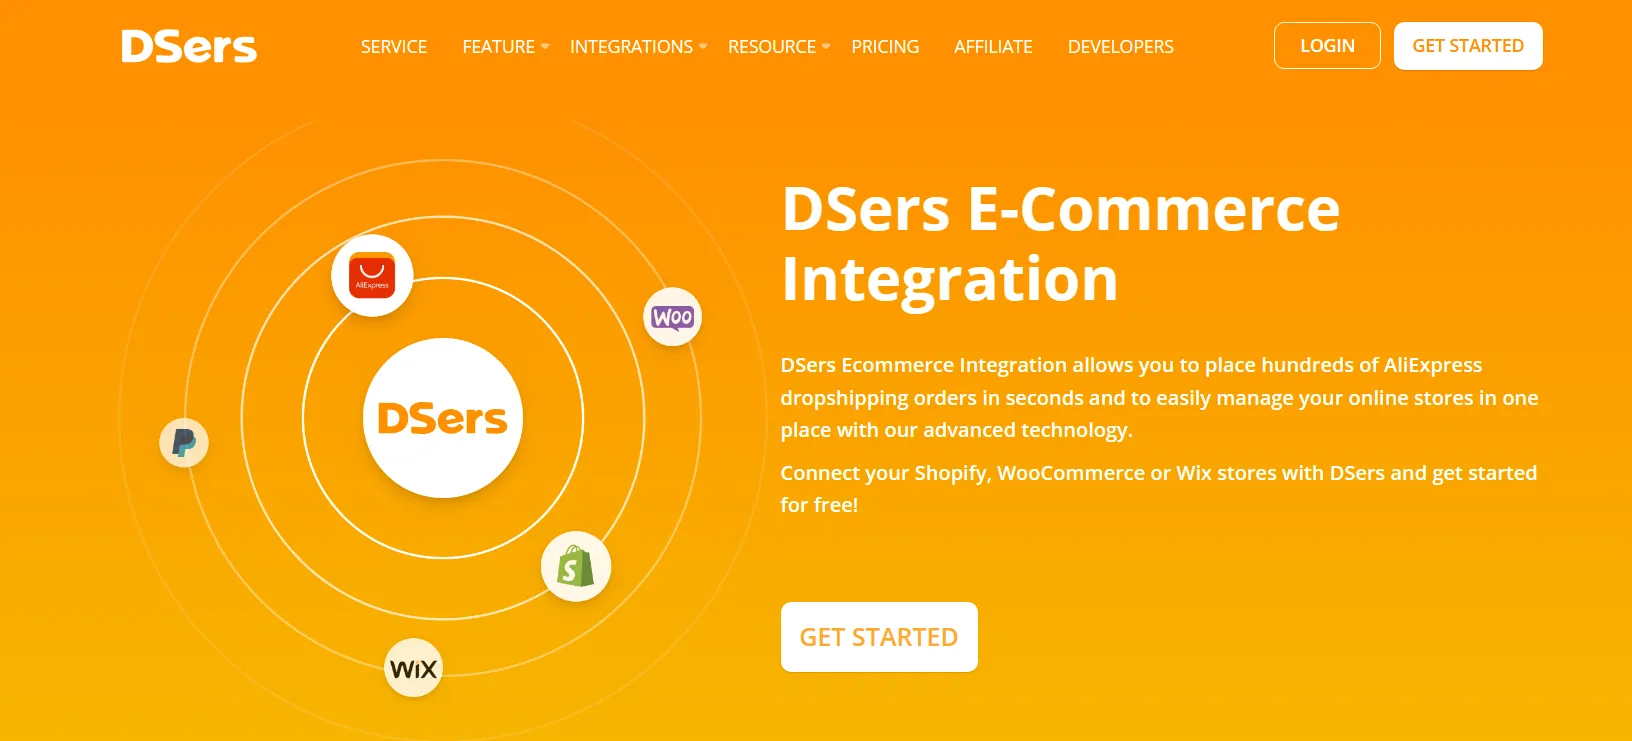 DSers E-Commerce Integration